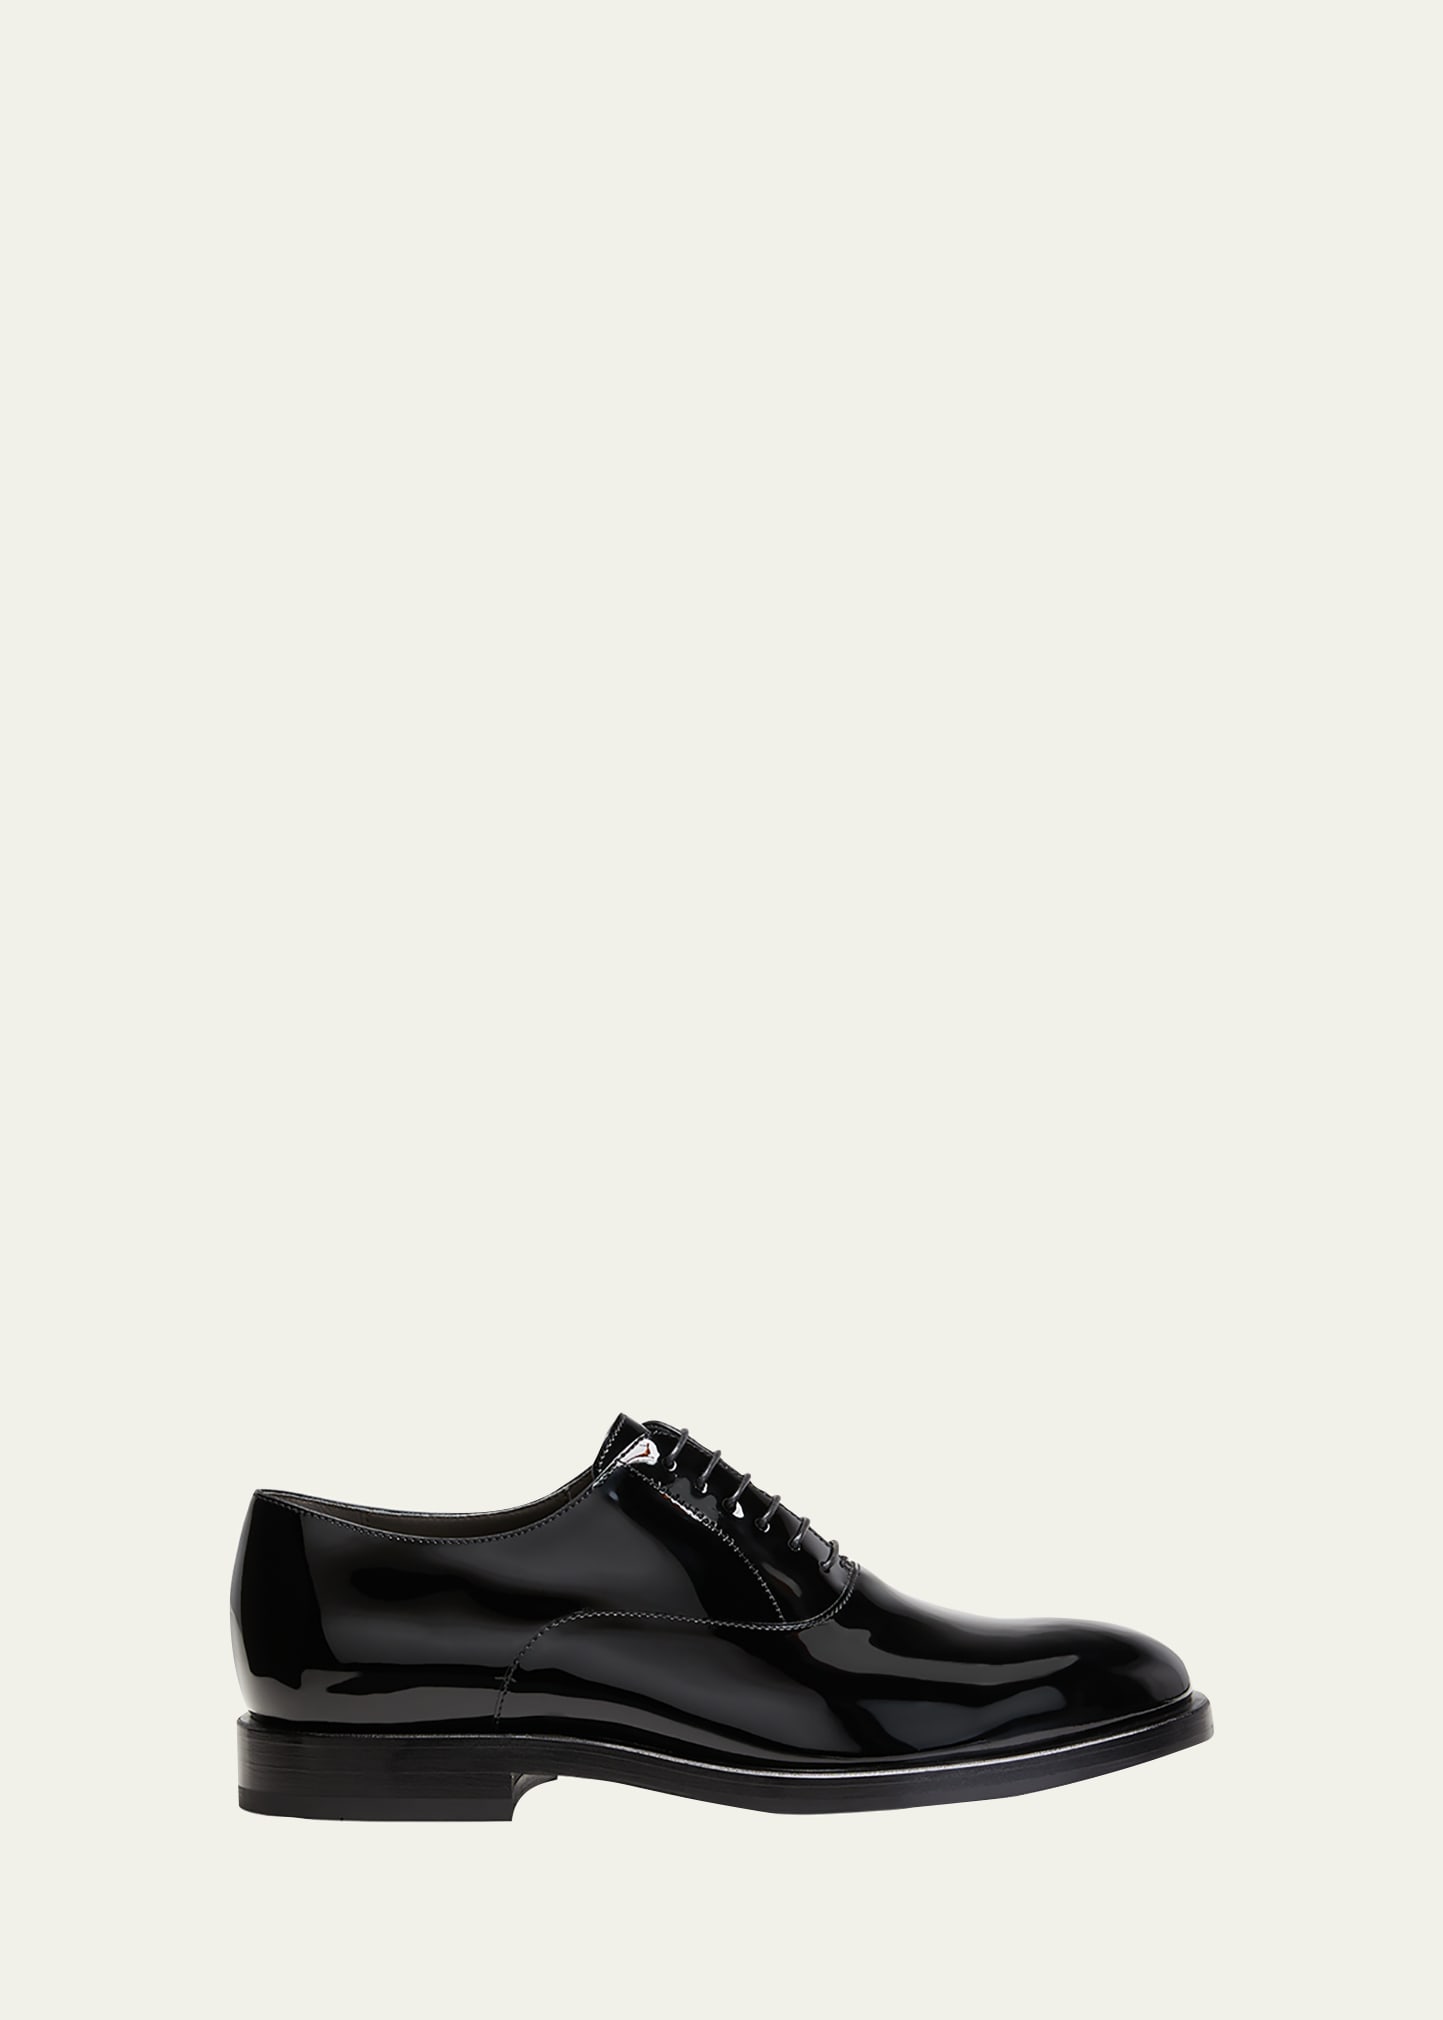 Men's Patent Leather Tuxedo Oxford Shoes